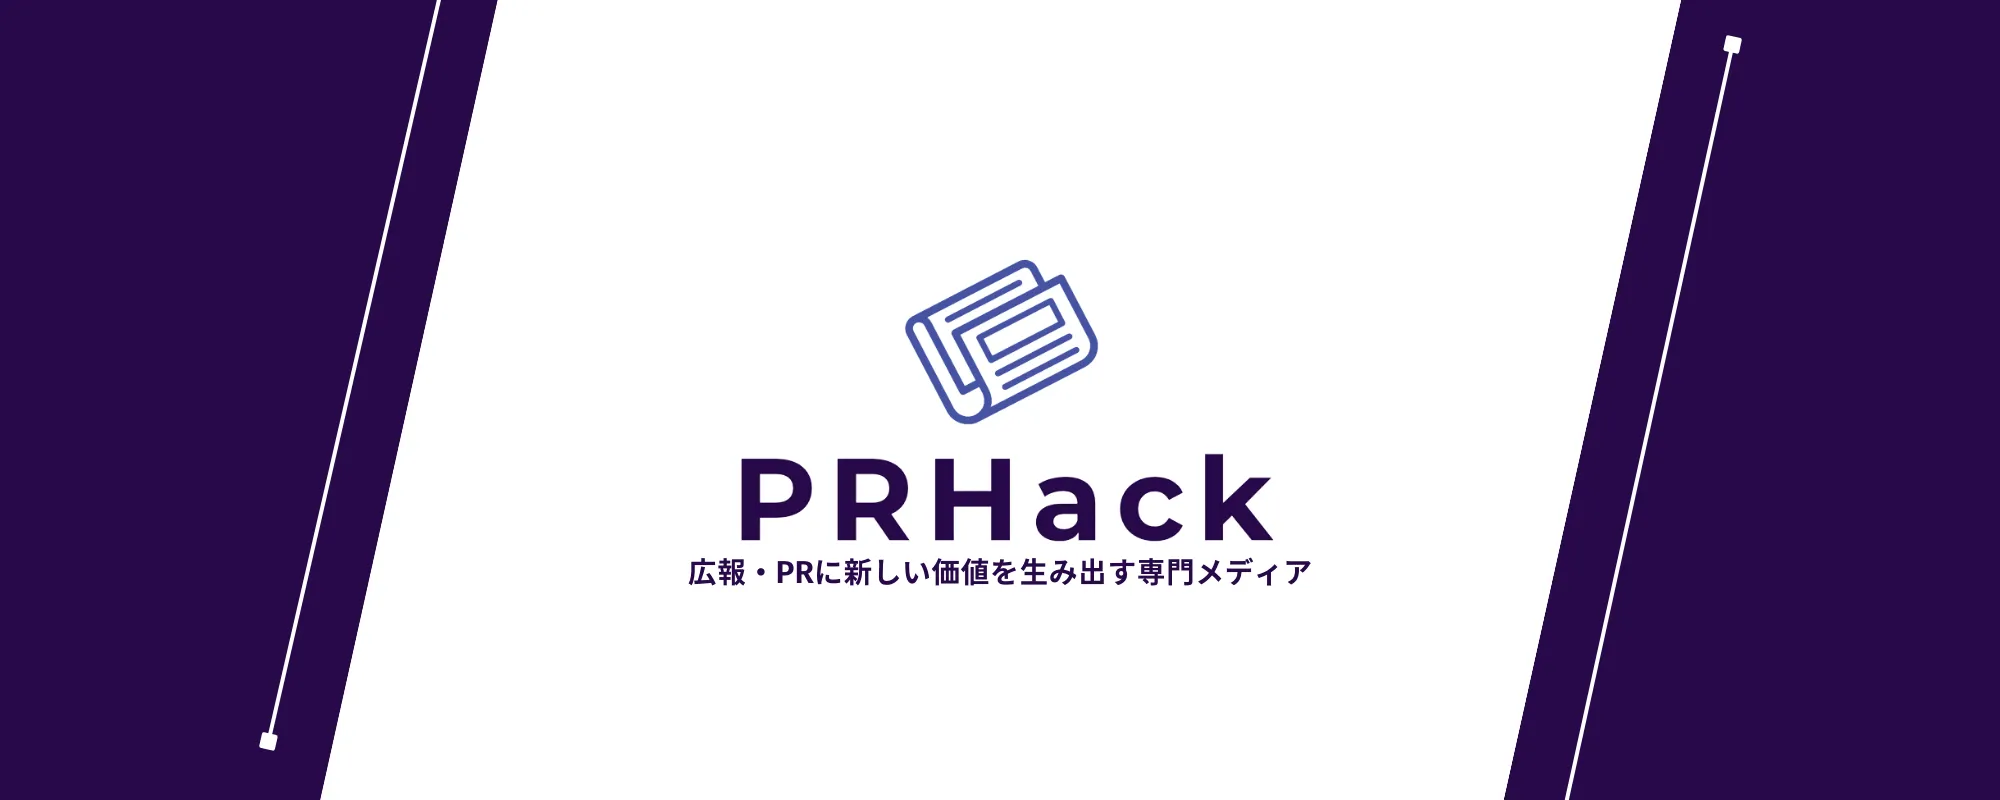 PRHACK_banner